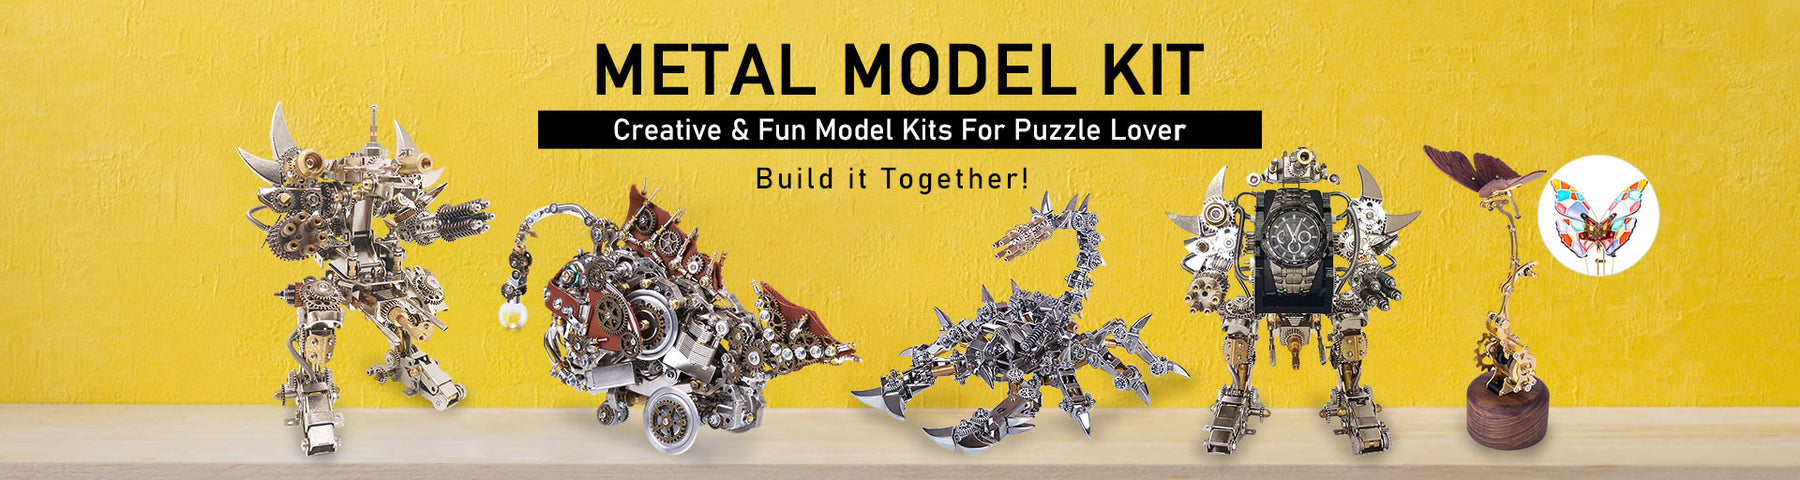 Metal Model Kits - Amazing DIY Models with Stunning Details